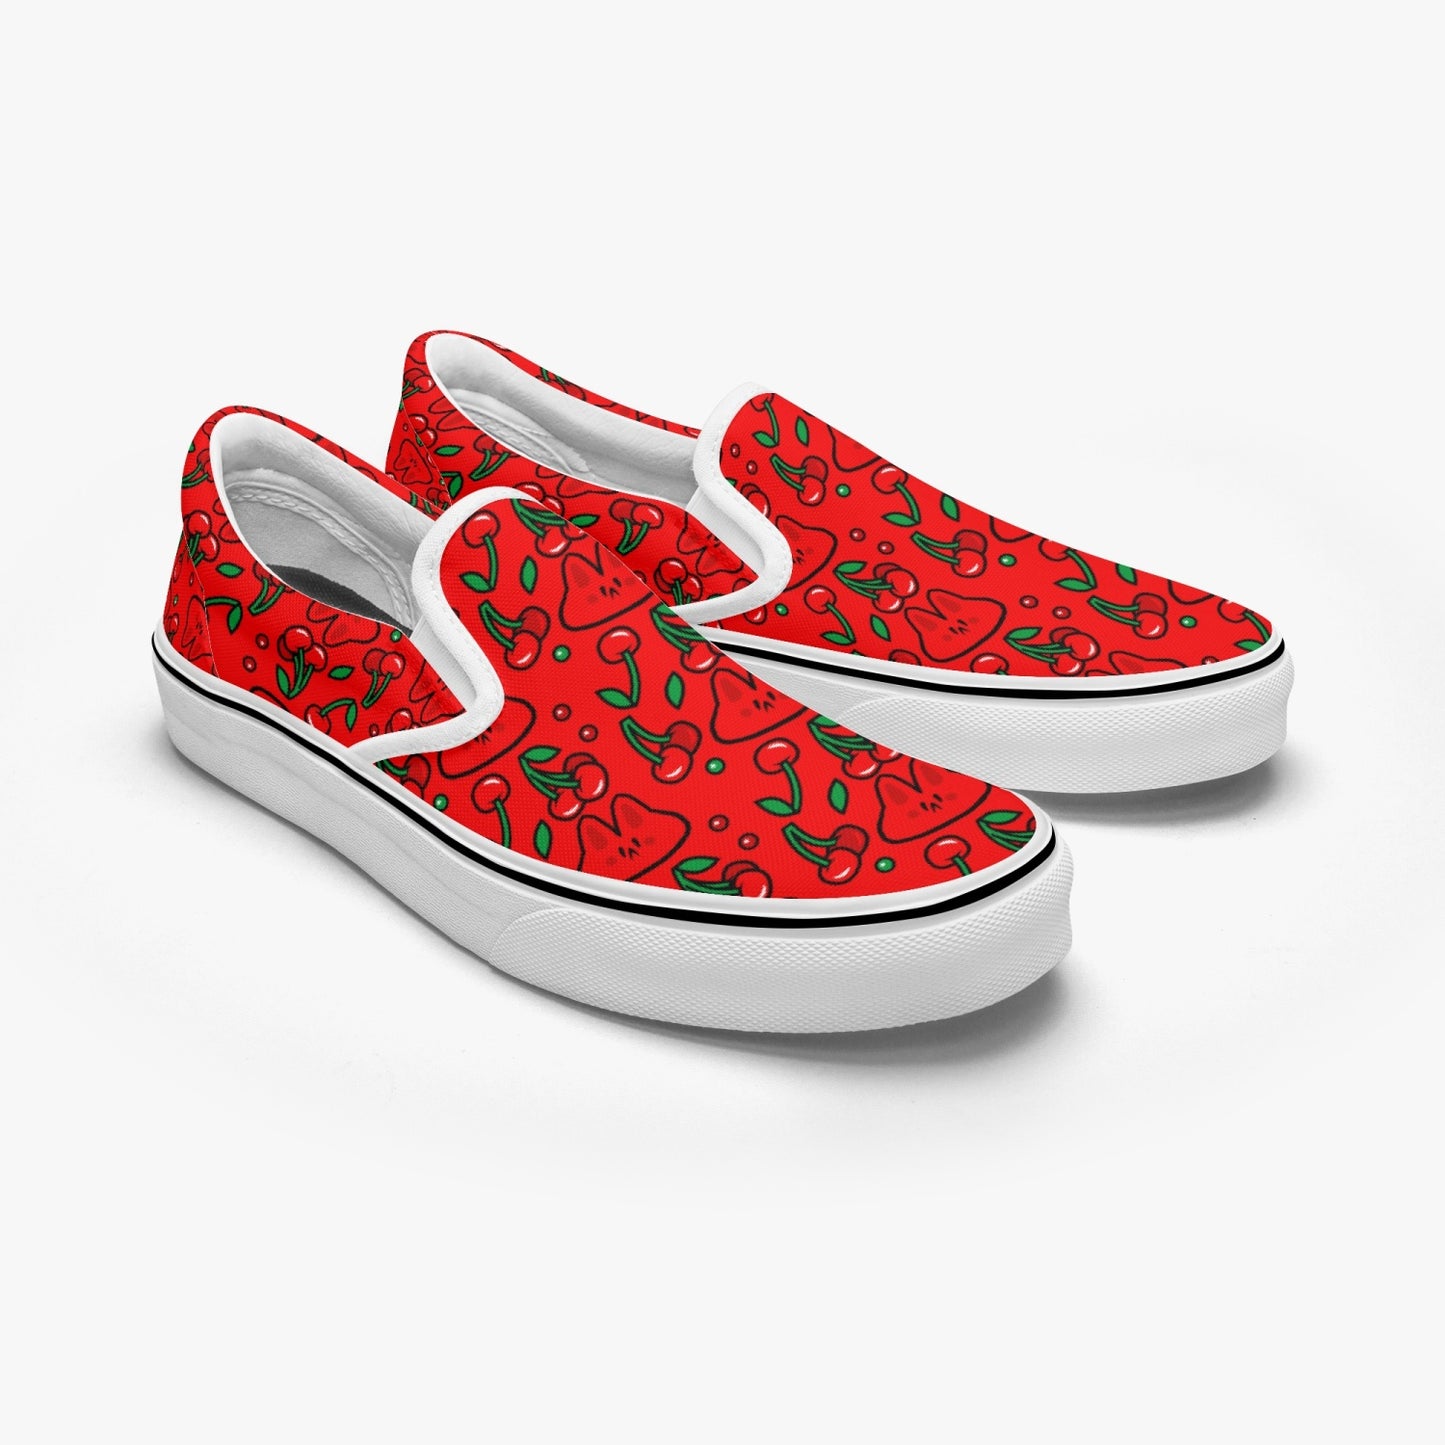 CherryCat Slip-On Shoes